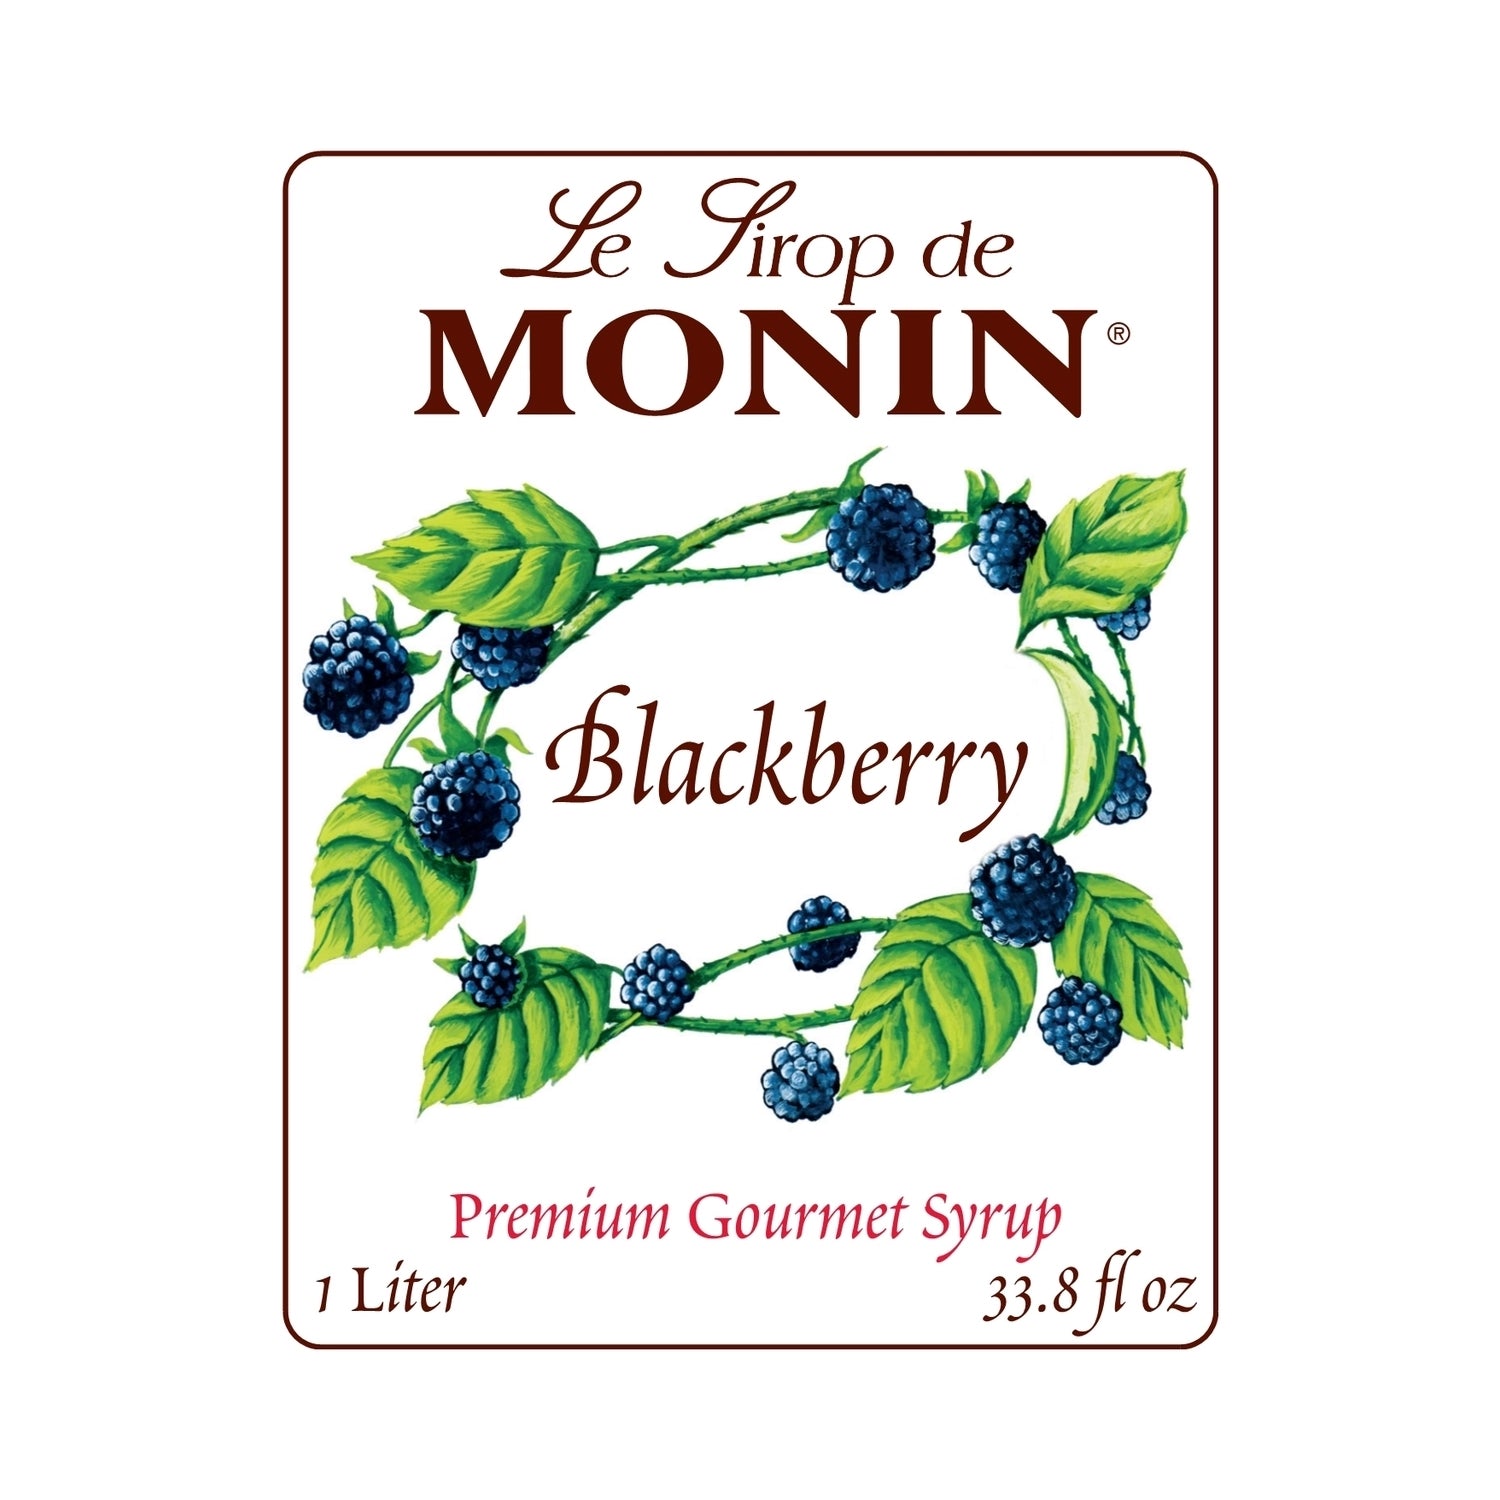 Monin Blackberry Syrup brand label